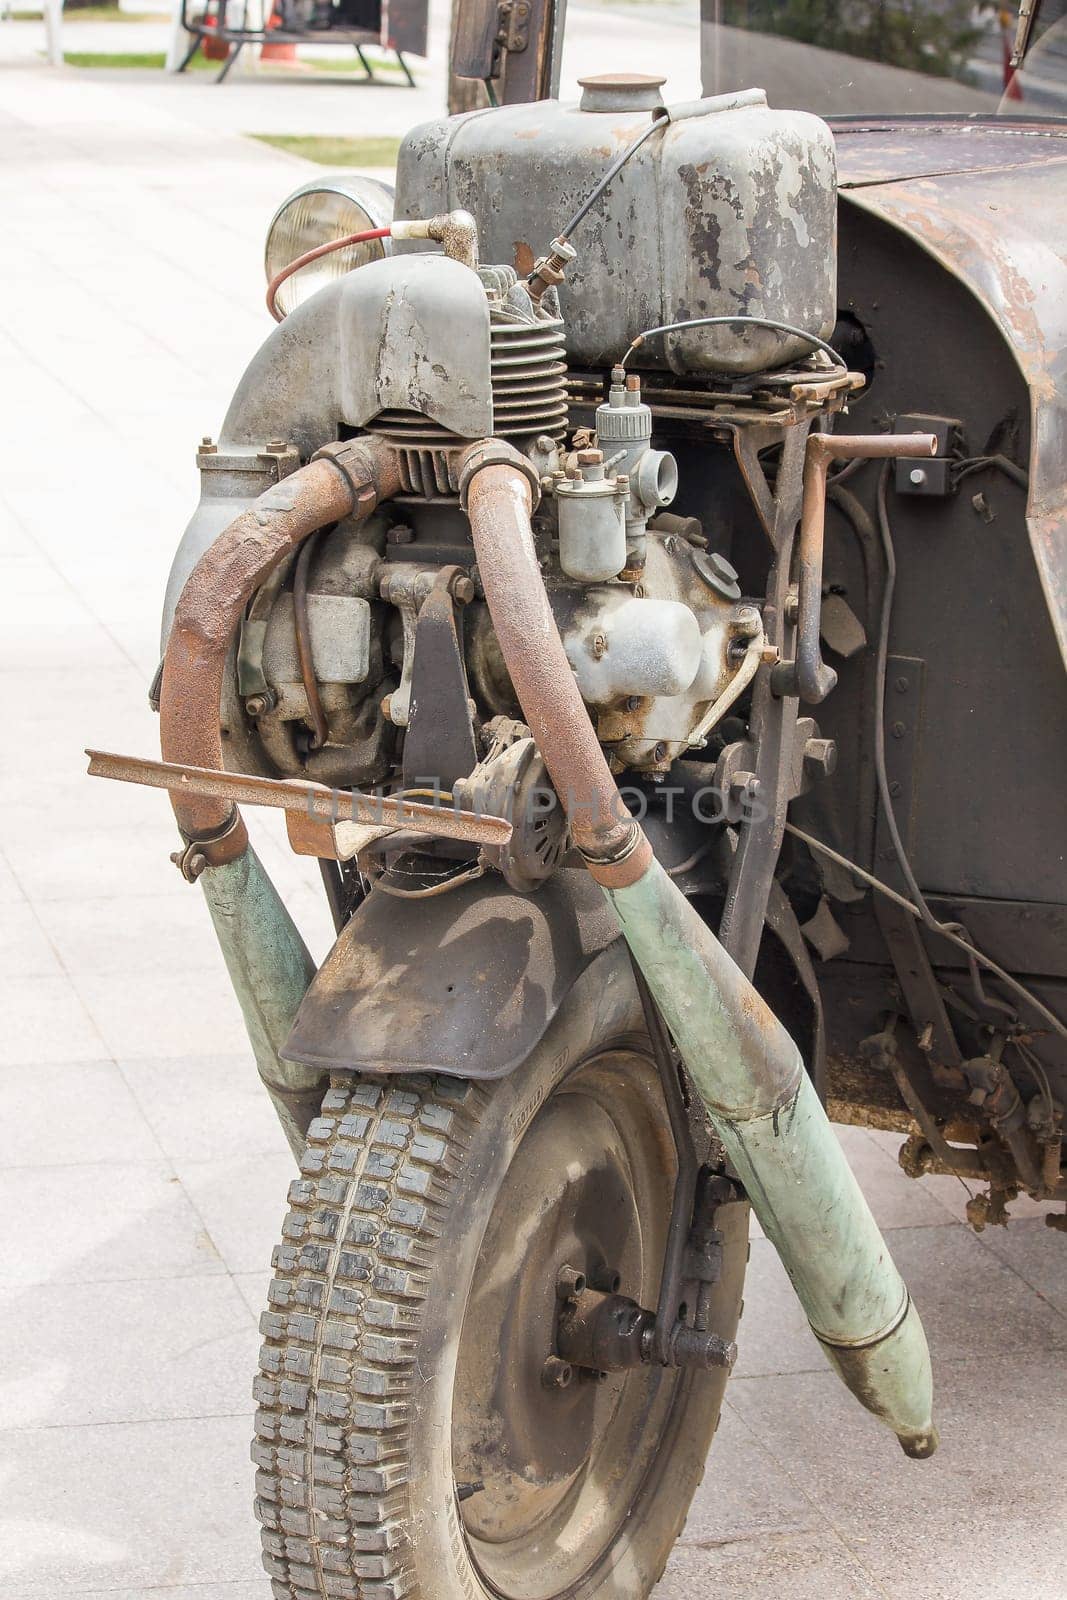 Vintage car engine on the front wheel.